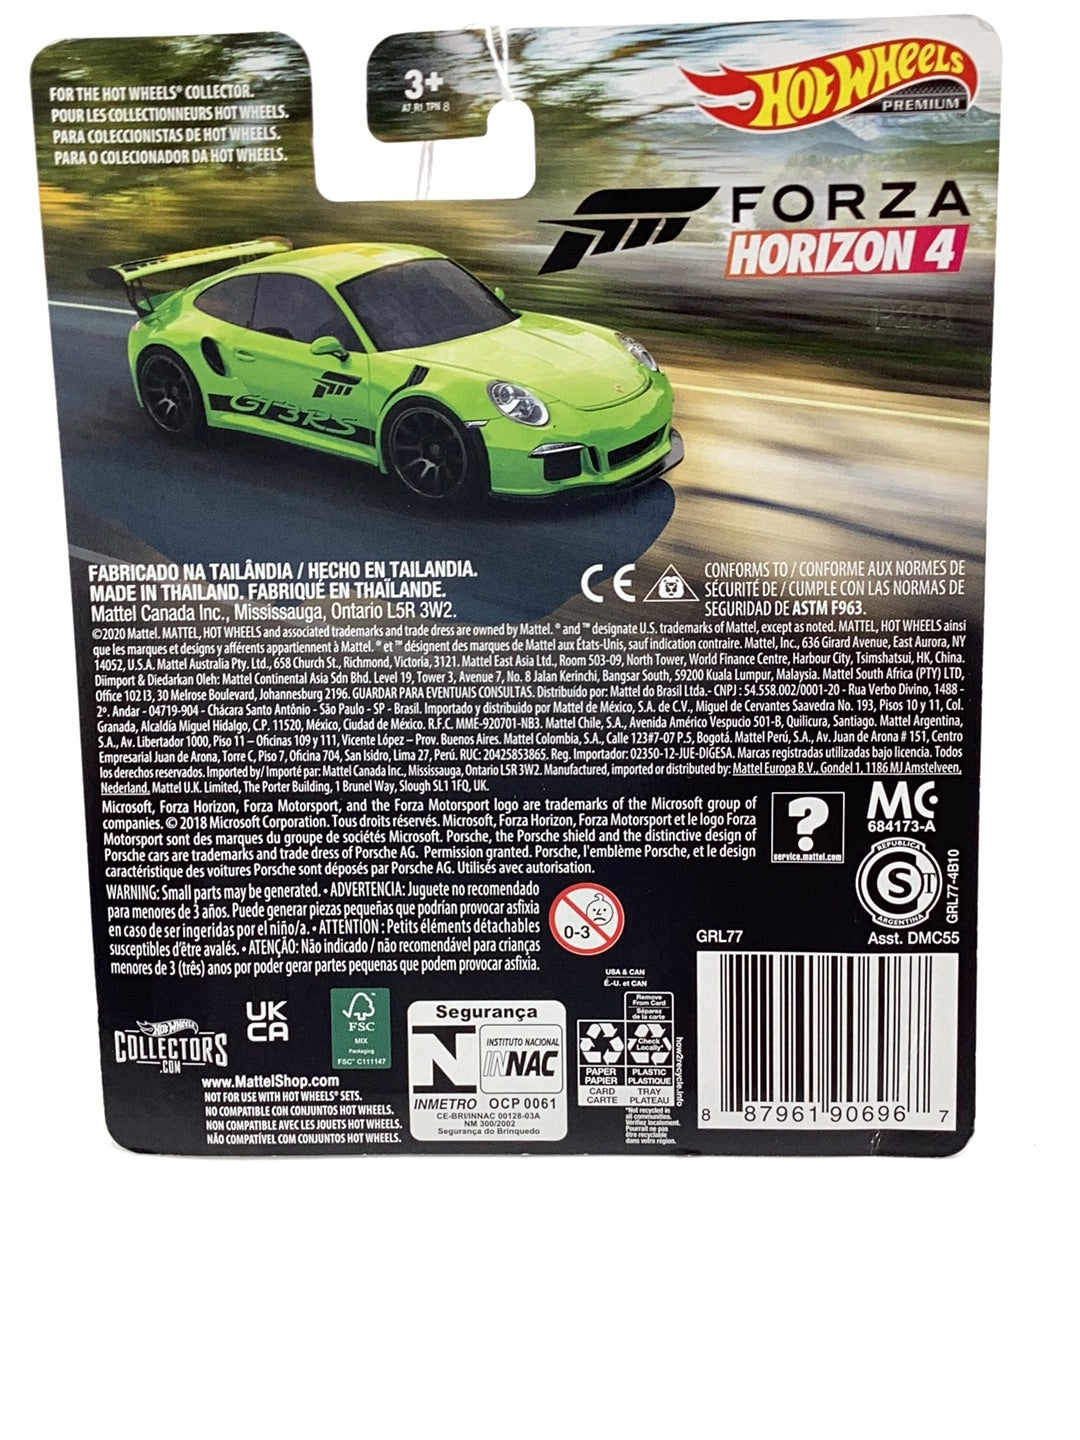 Hot Wheels Forza Horizon 4 Porsche 911 GT3 RS